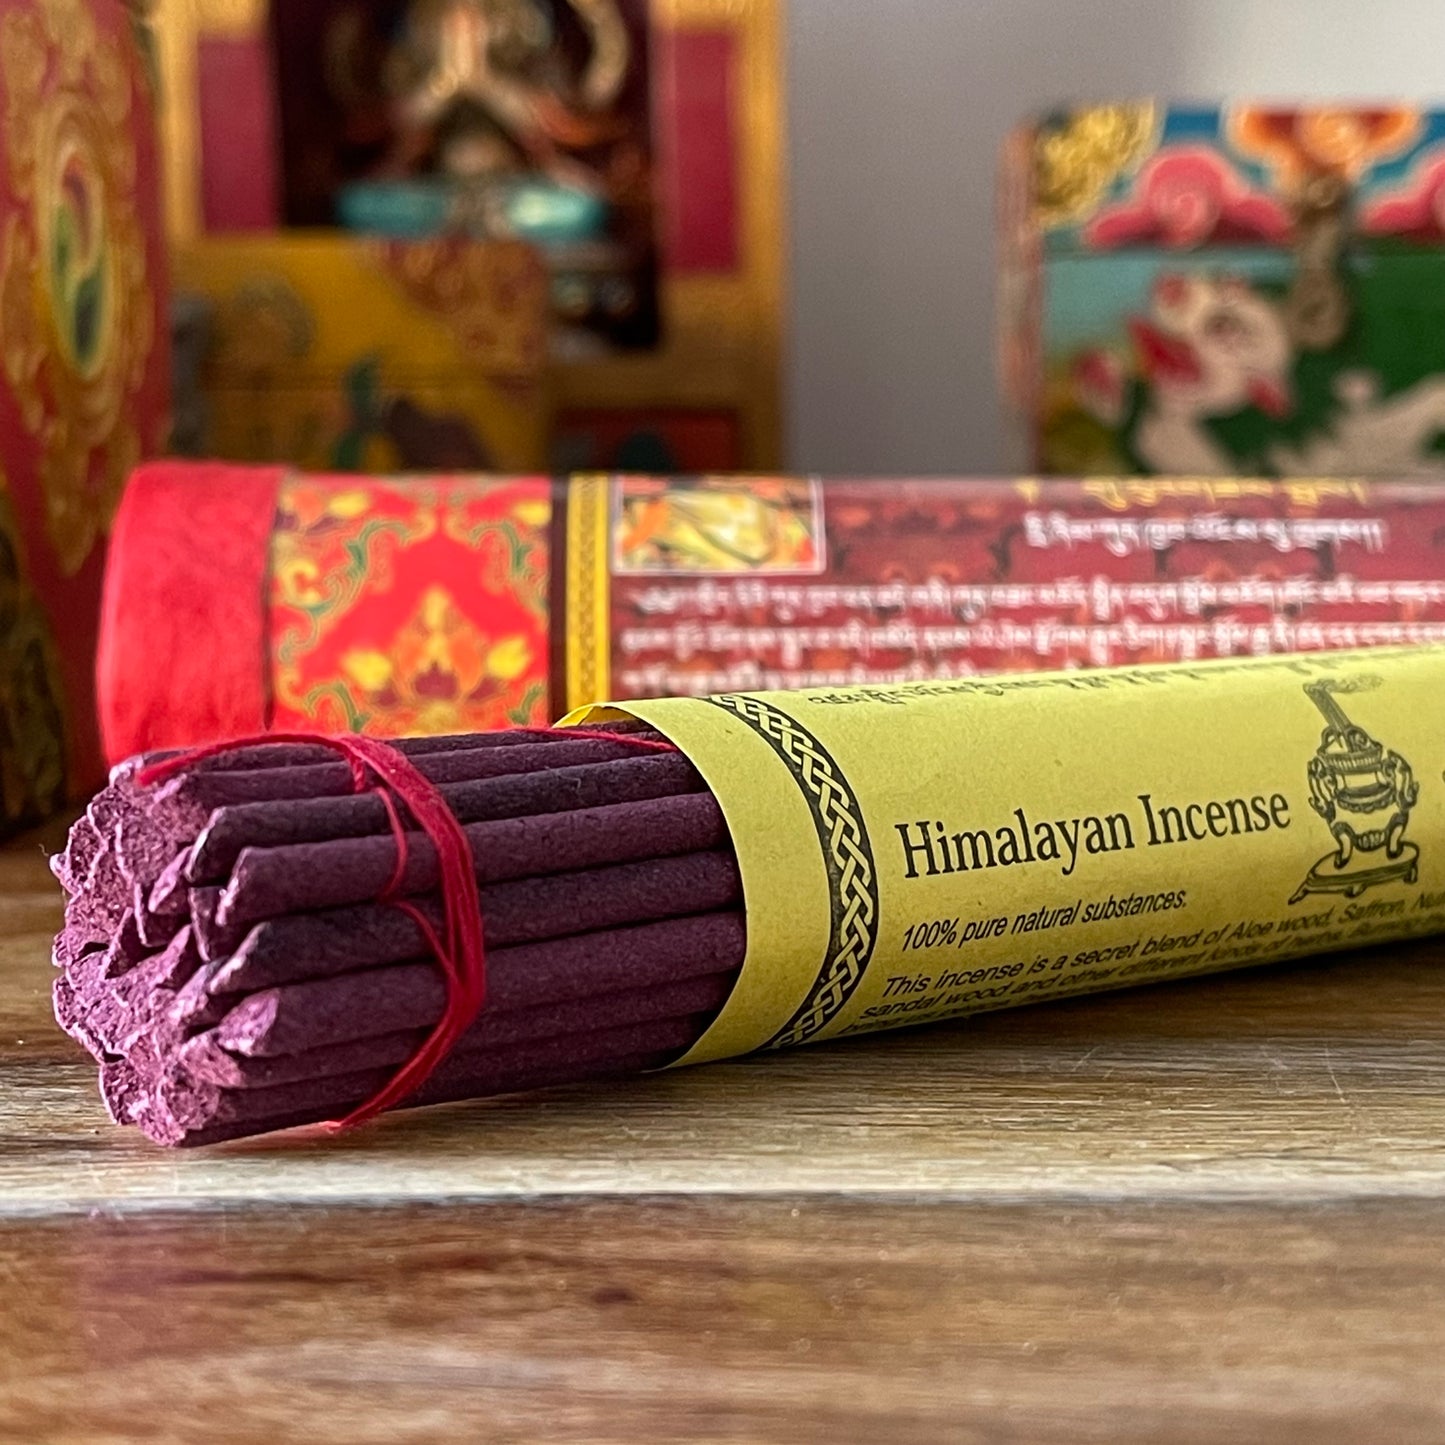 Himalayan Arts  Guru Padmasambhava Incense